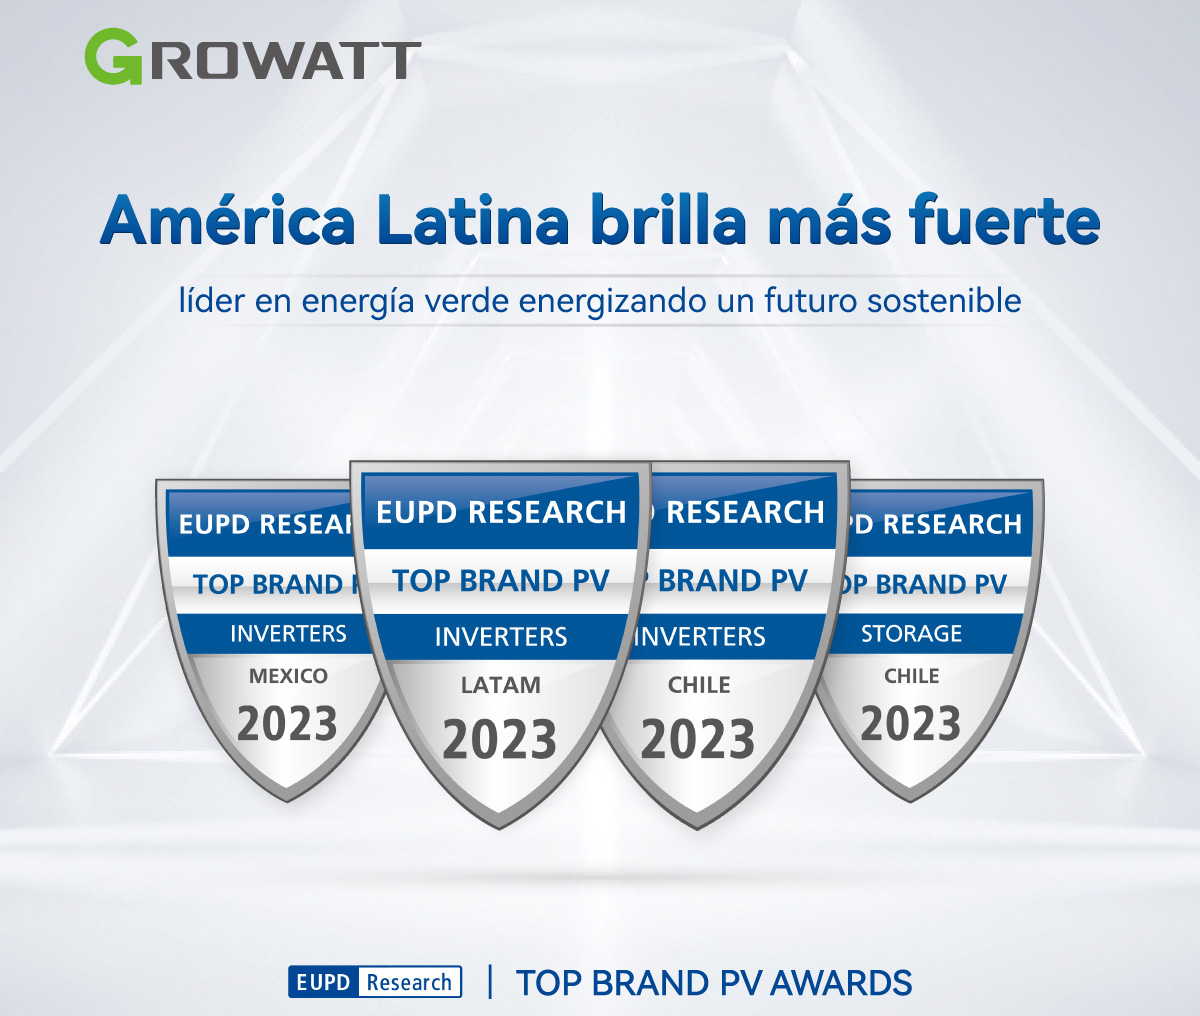 Growatt brilla con el premio Top Brand PV Award 2023